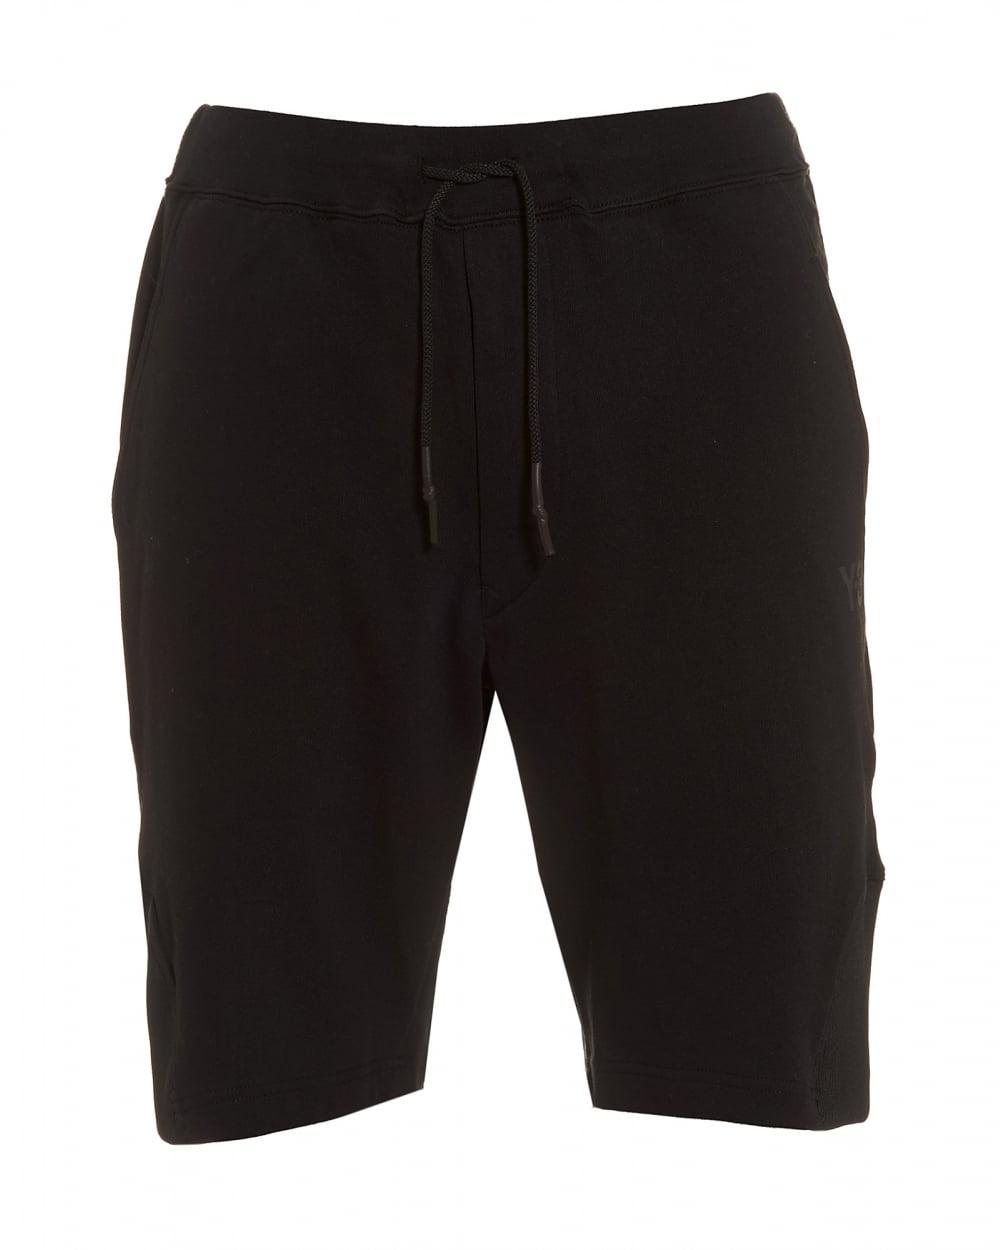 Lyst - Y-3 Future Craft Short, Black Gym Sweat Shorts in Black for Men